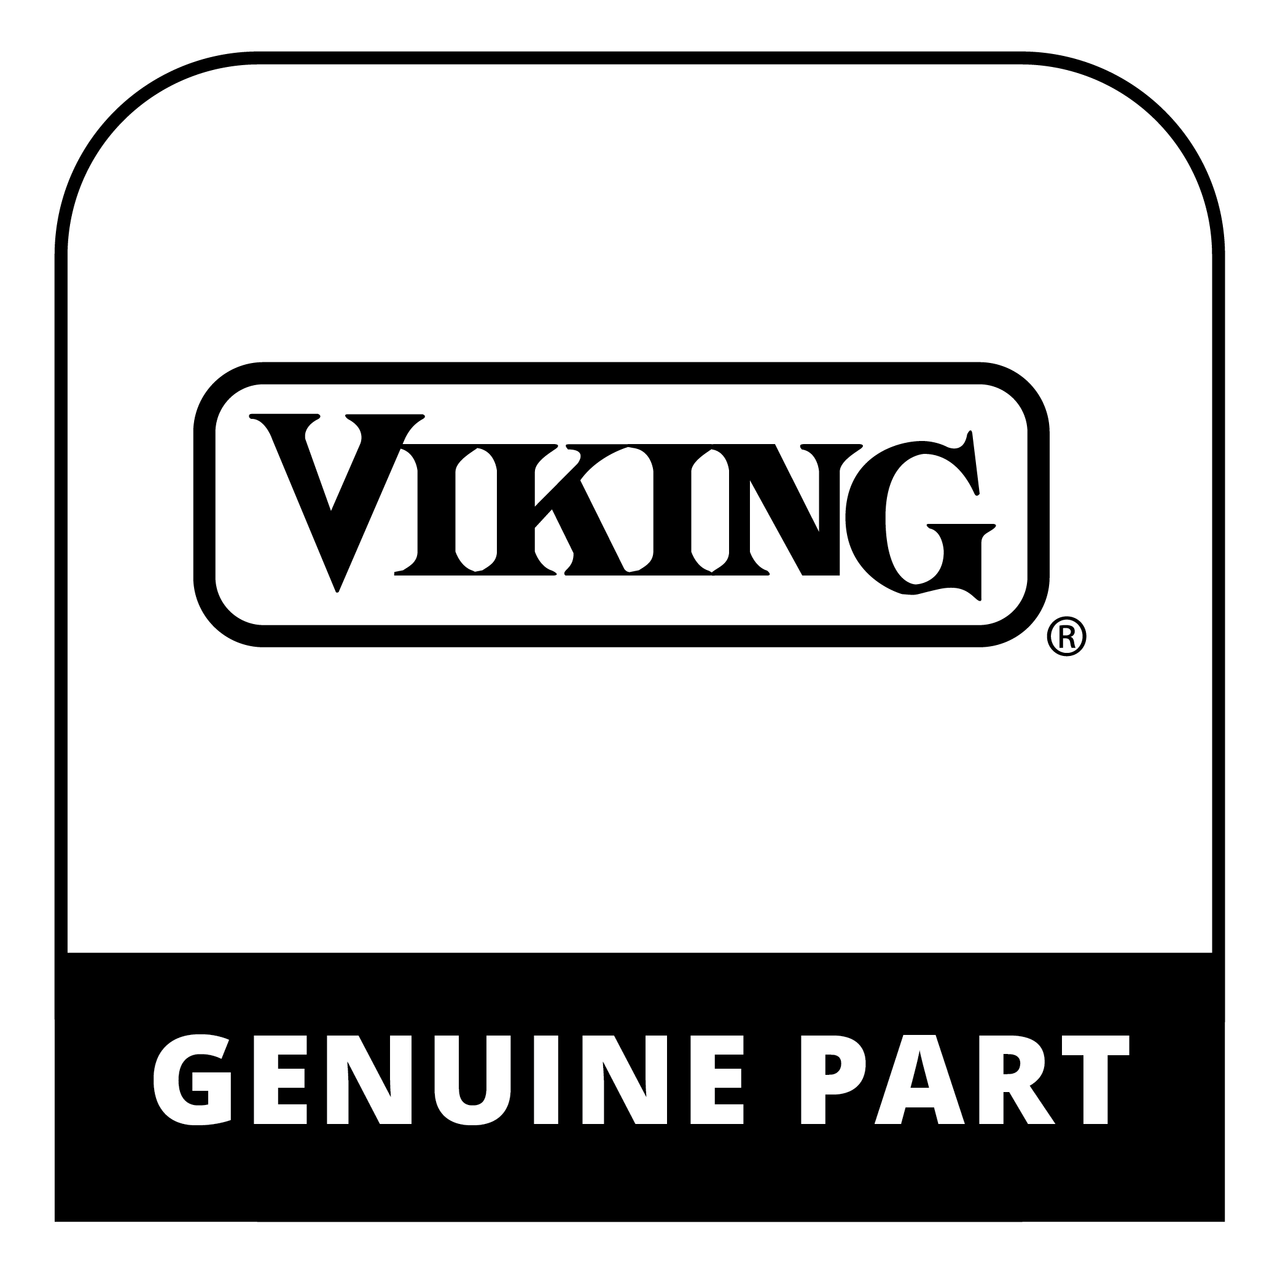 Viking 070813-000 - 24Dz Glass Ss Art - Rh - Old Badge - Genuine Viking Part